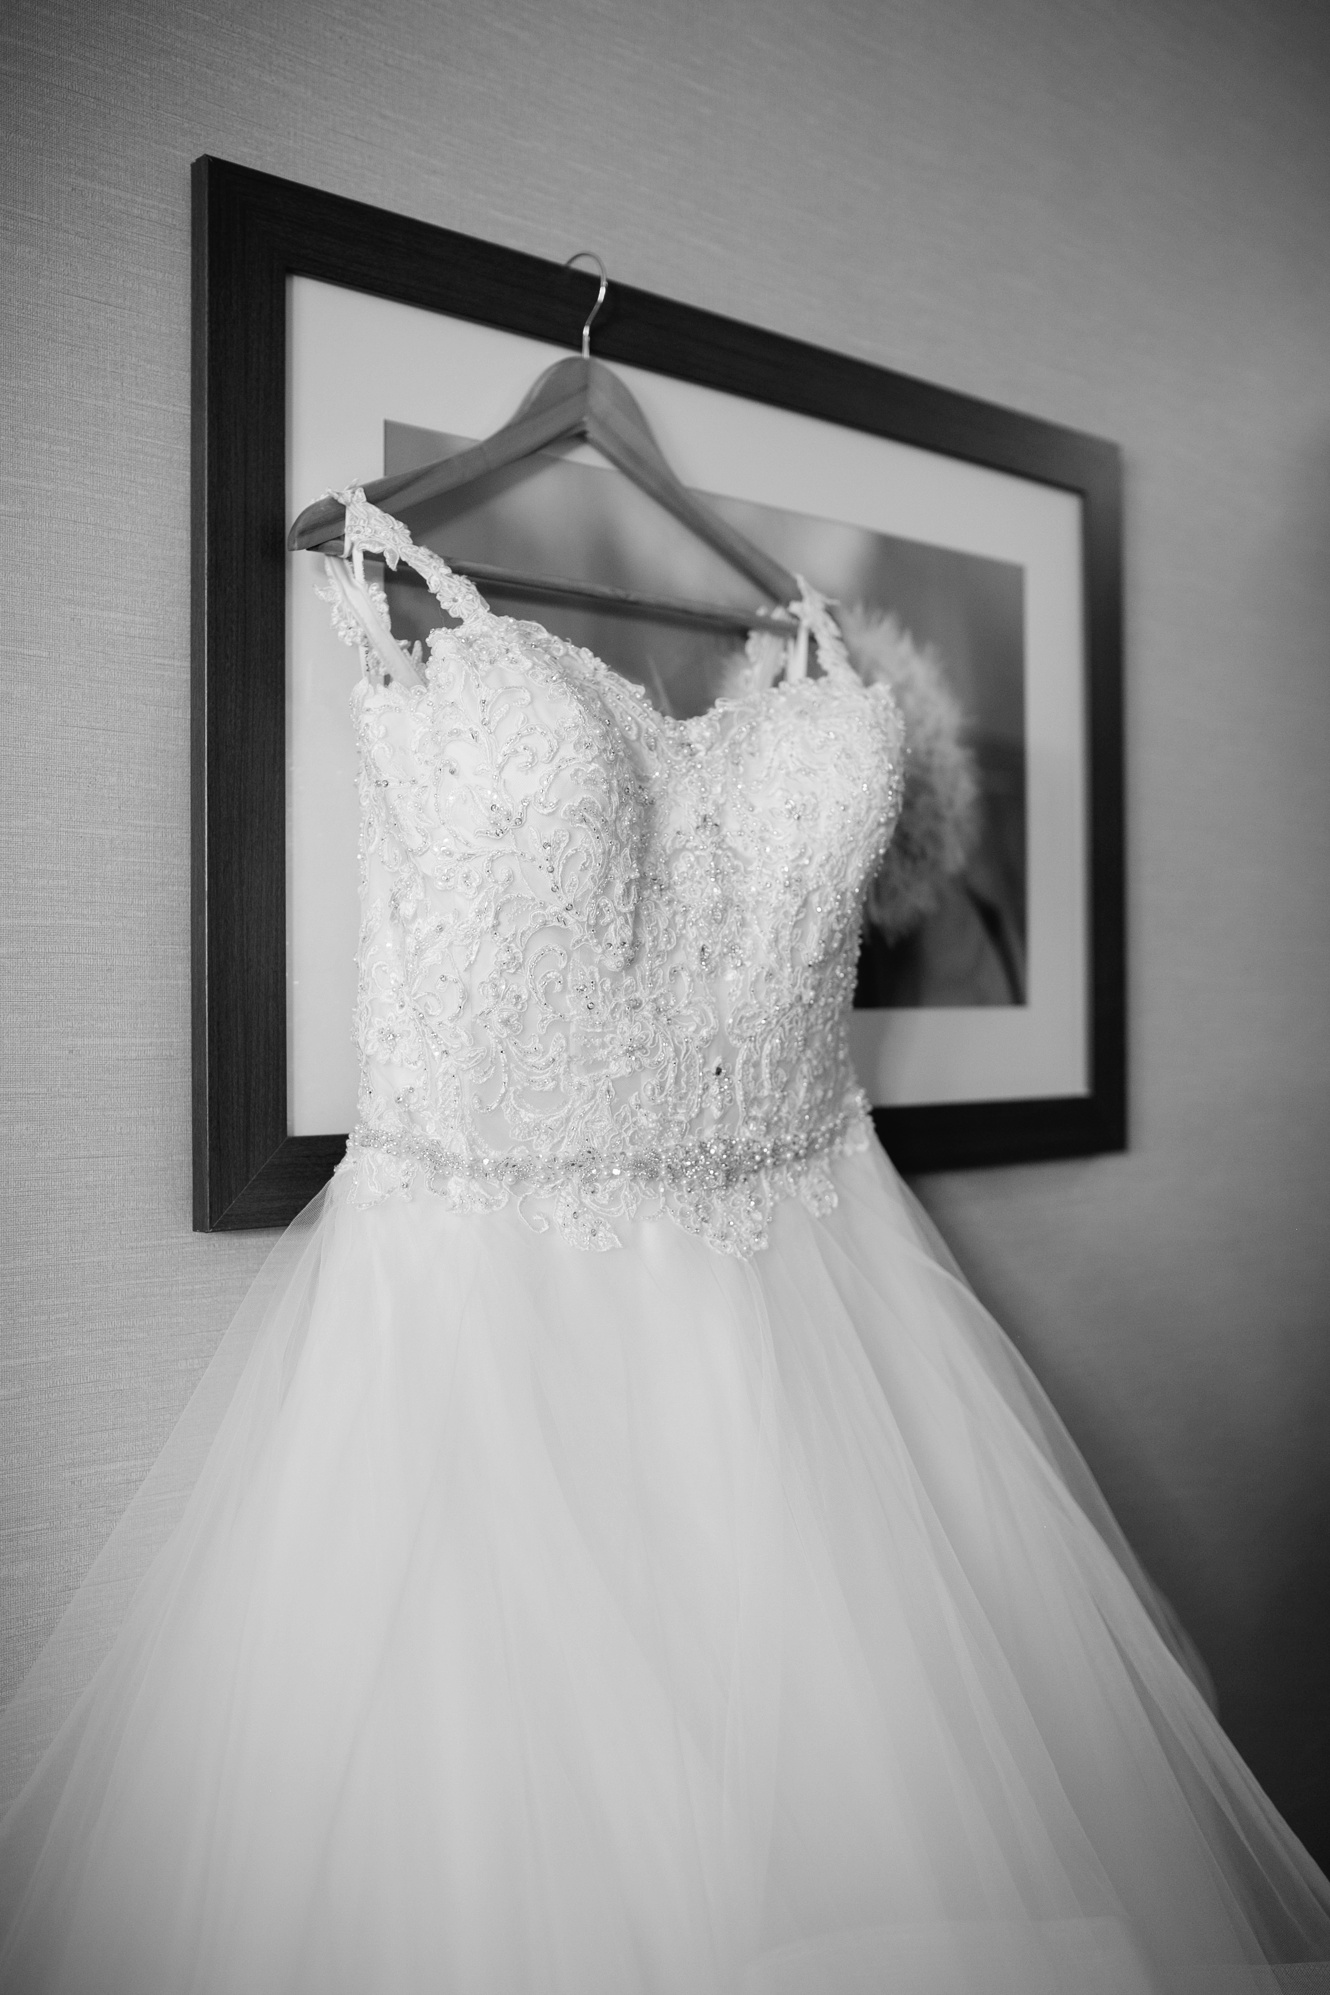 Black and white portrait of wedding dress photo